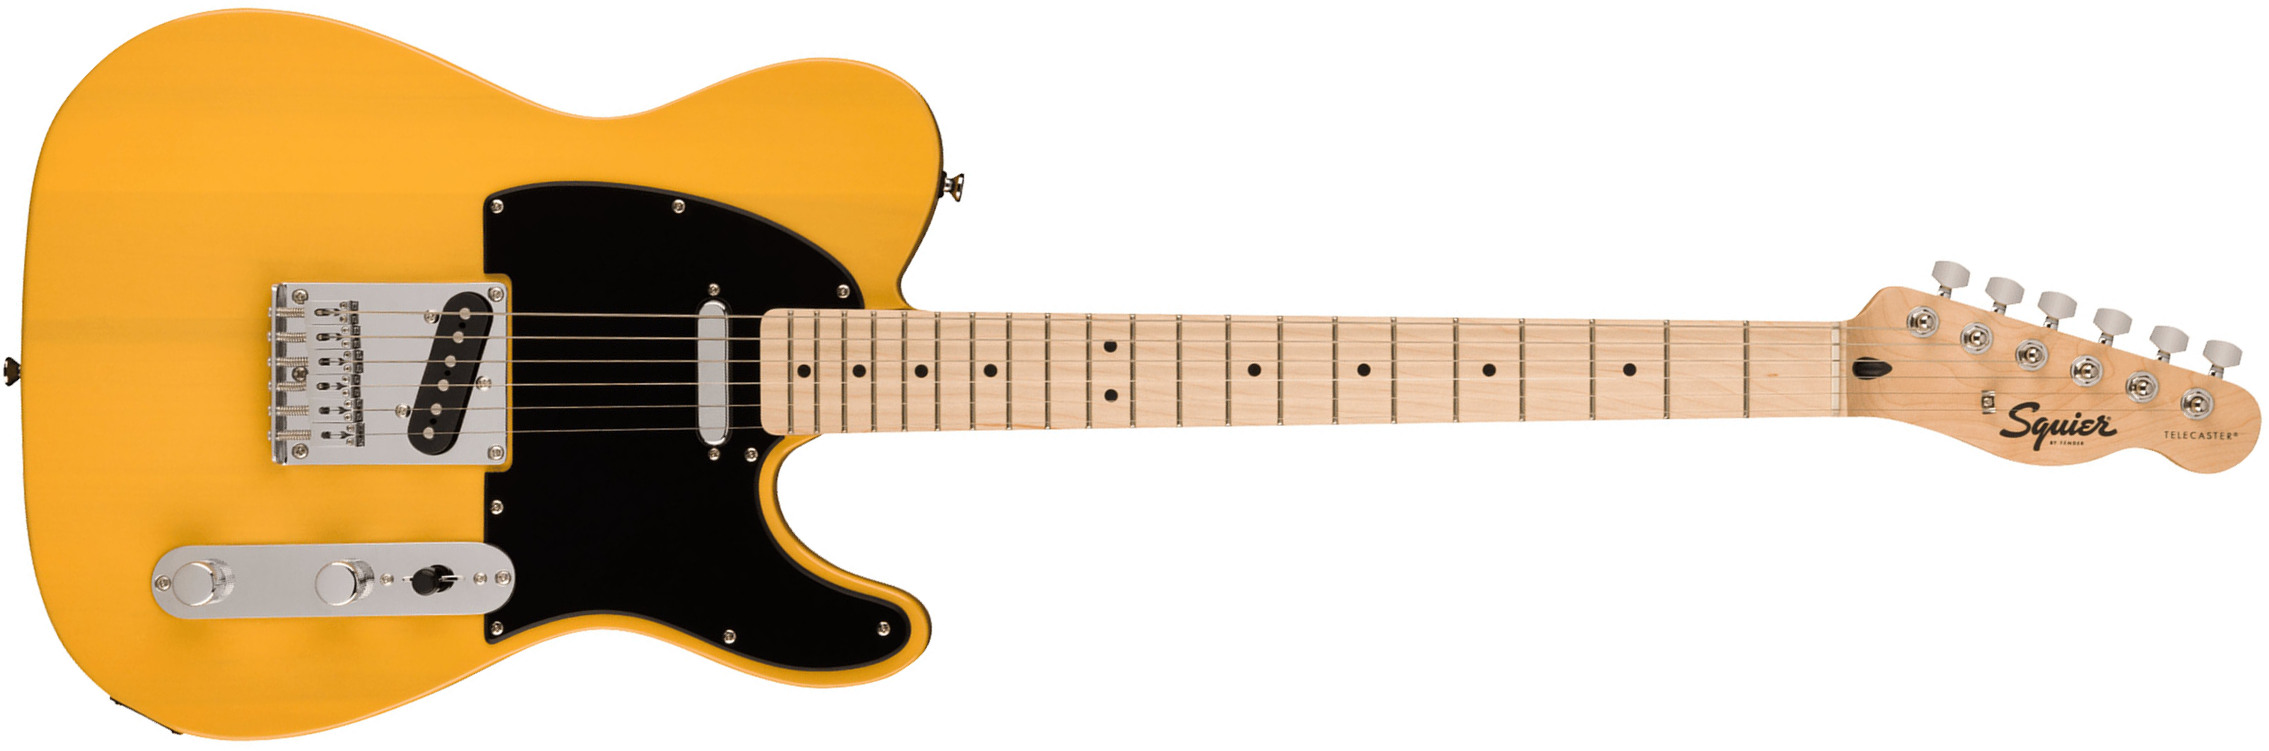 Squier Tele Sonic 2s Ht Mn - Butterscotch Blonde - Televorm elektrische gitaar - Main picture